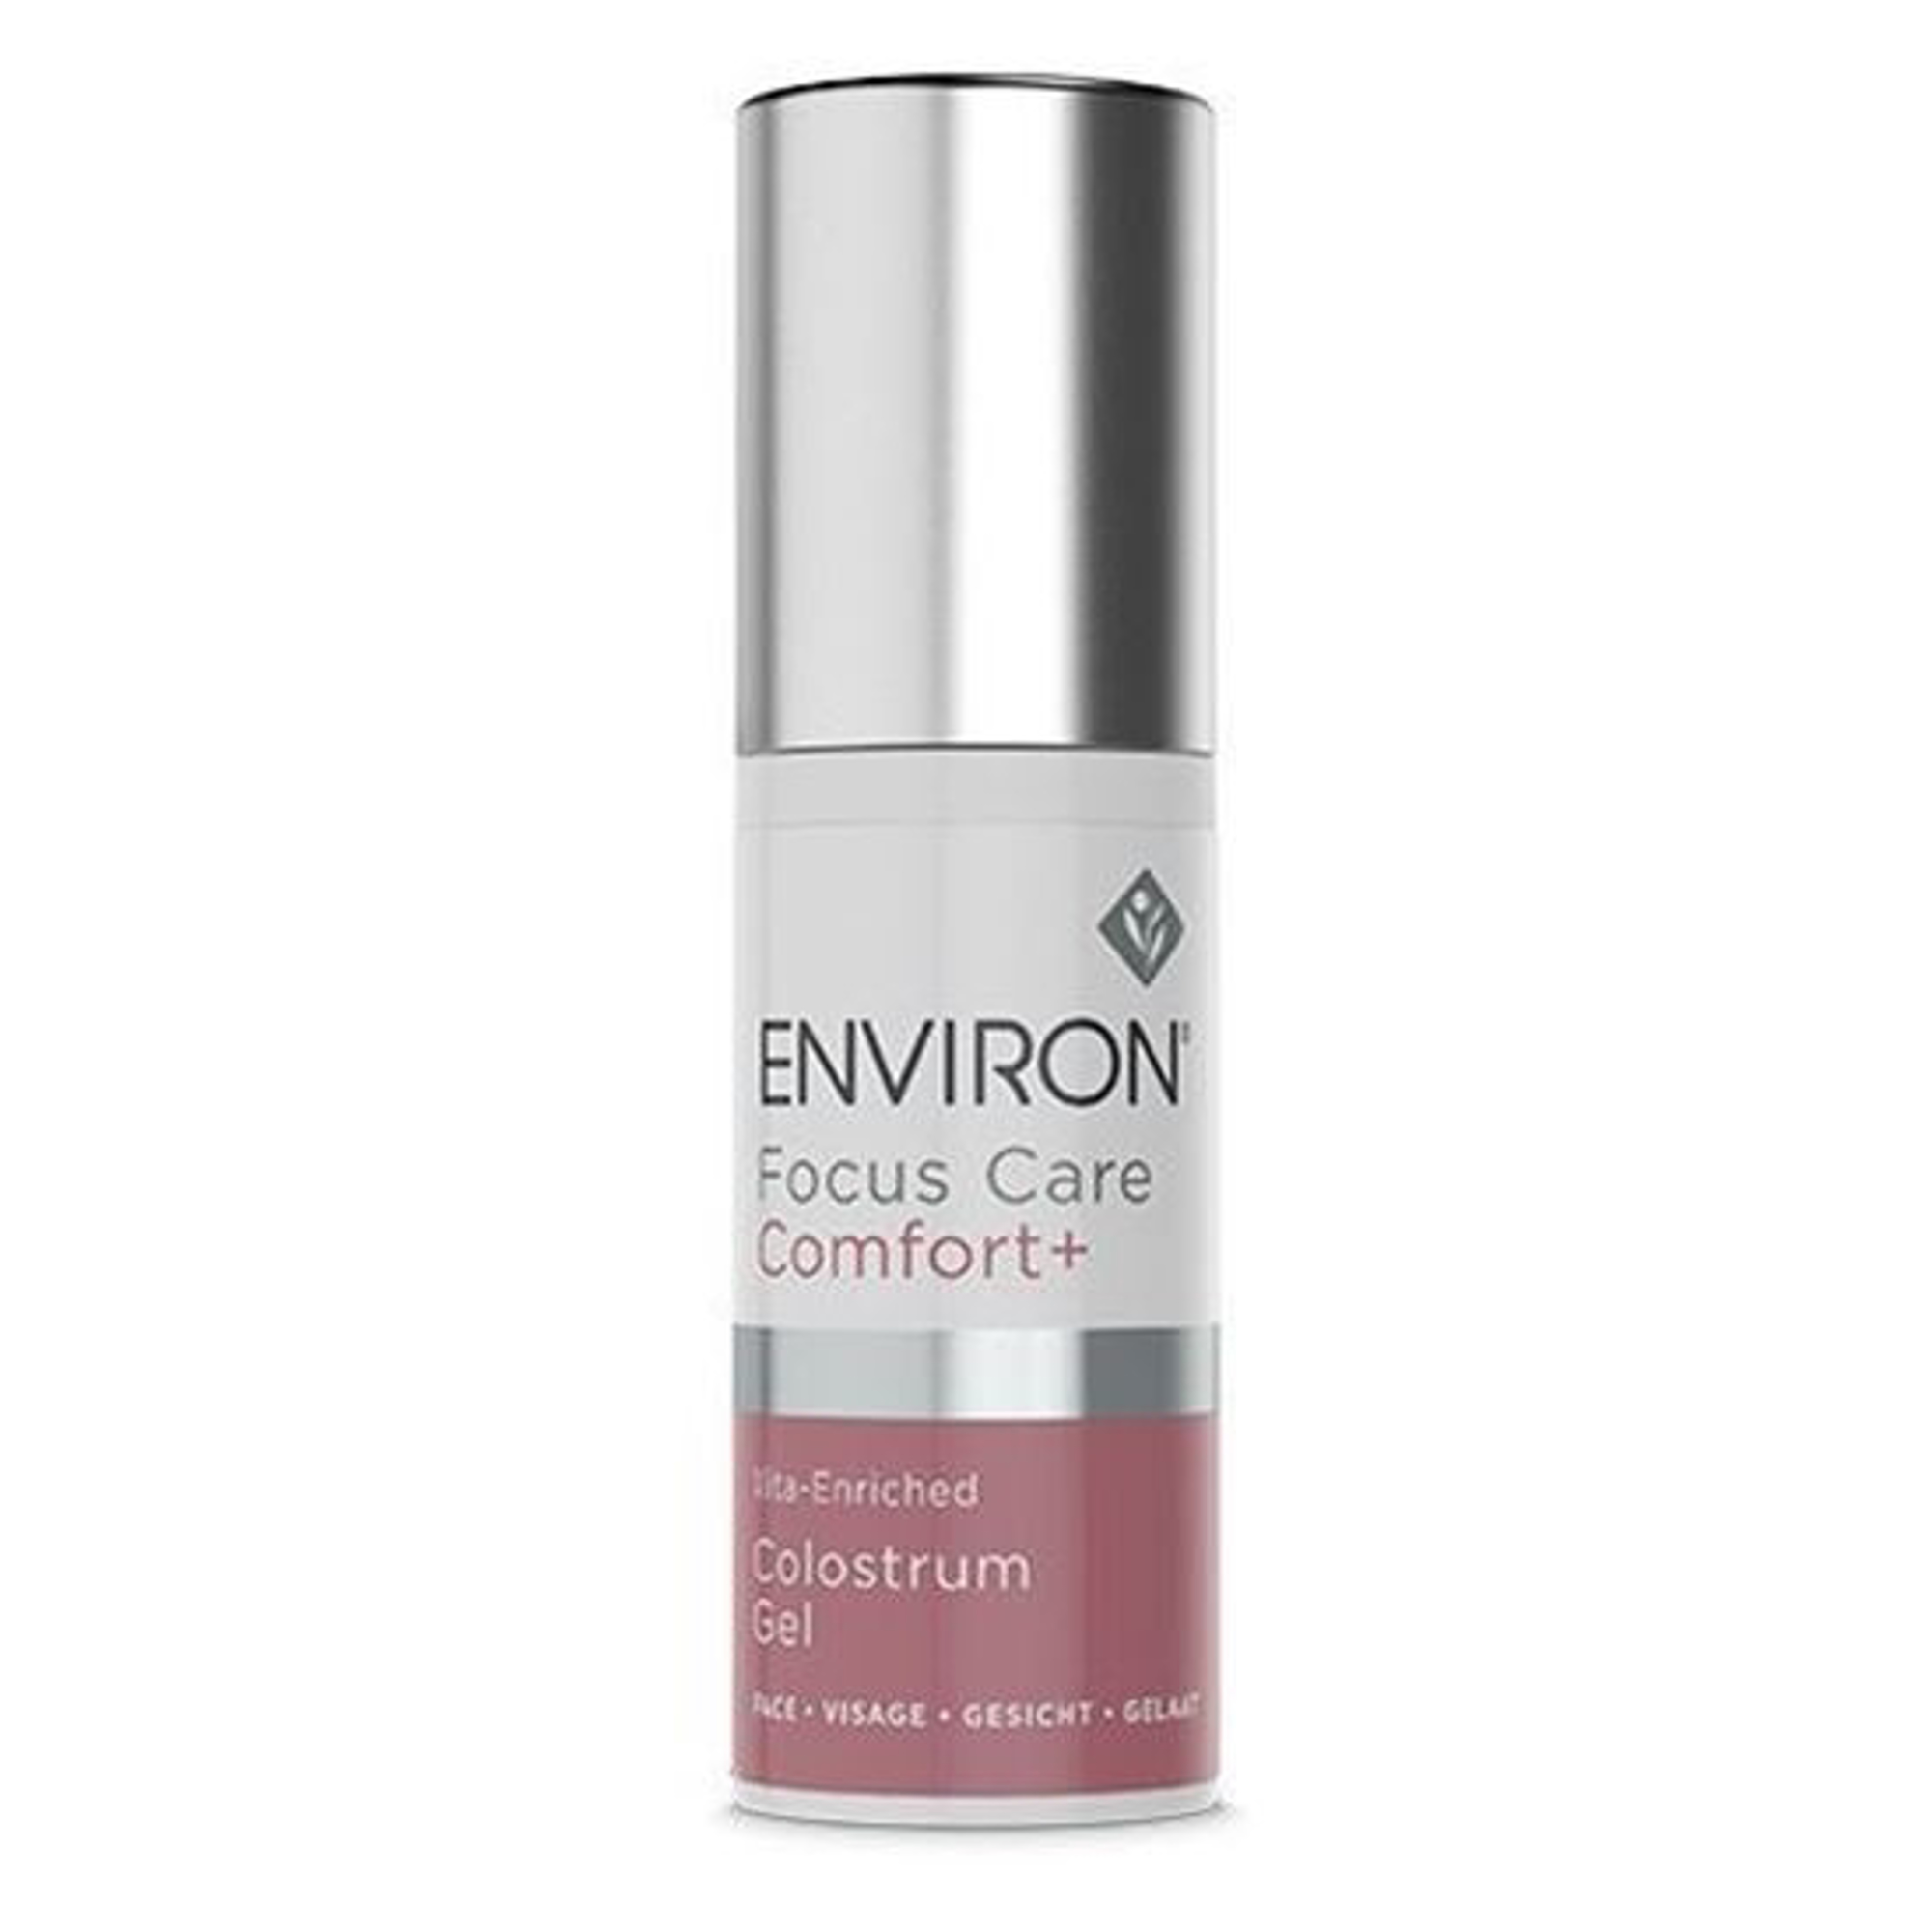 Focus Care Comfort + Vita-Enriched Colostrum Gel 30ml van ENVIRON